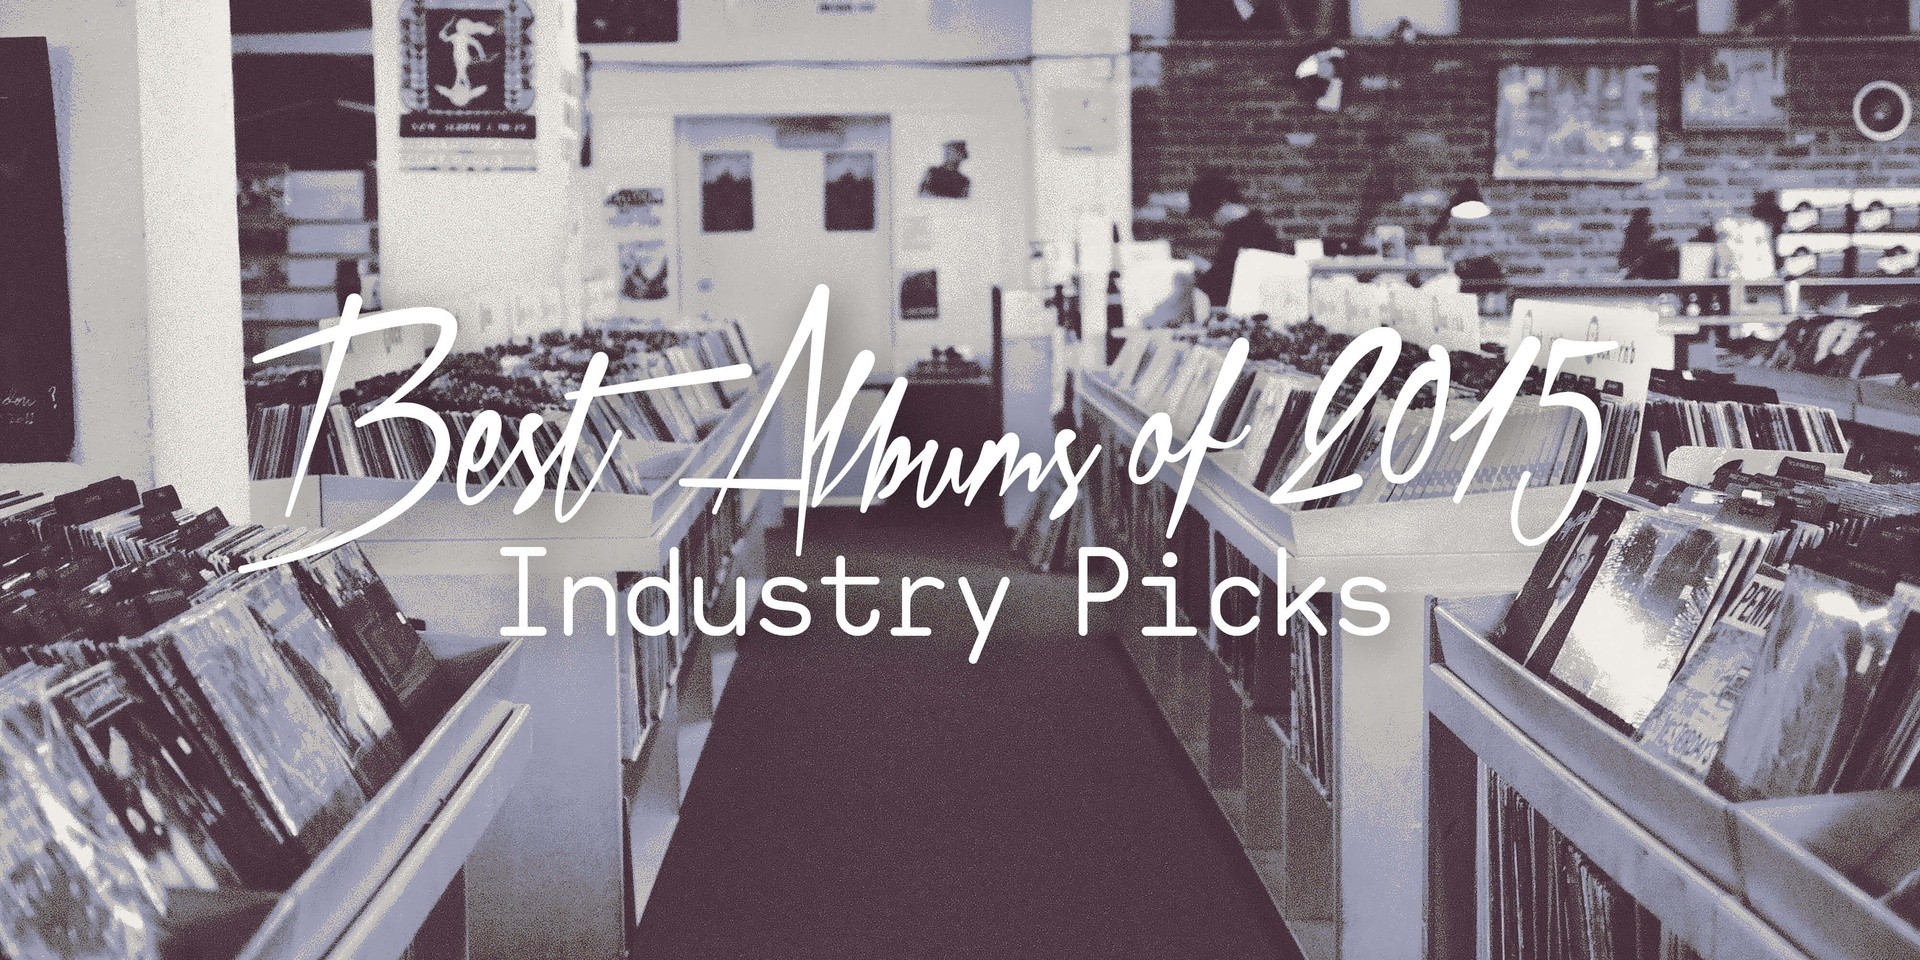 Best Albums of 2015: Industry Picks